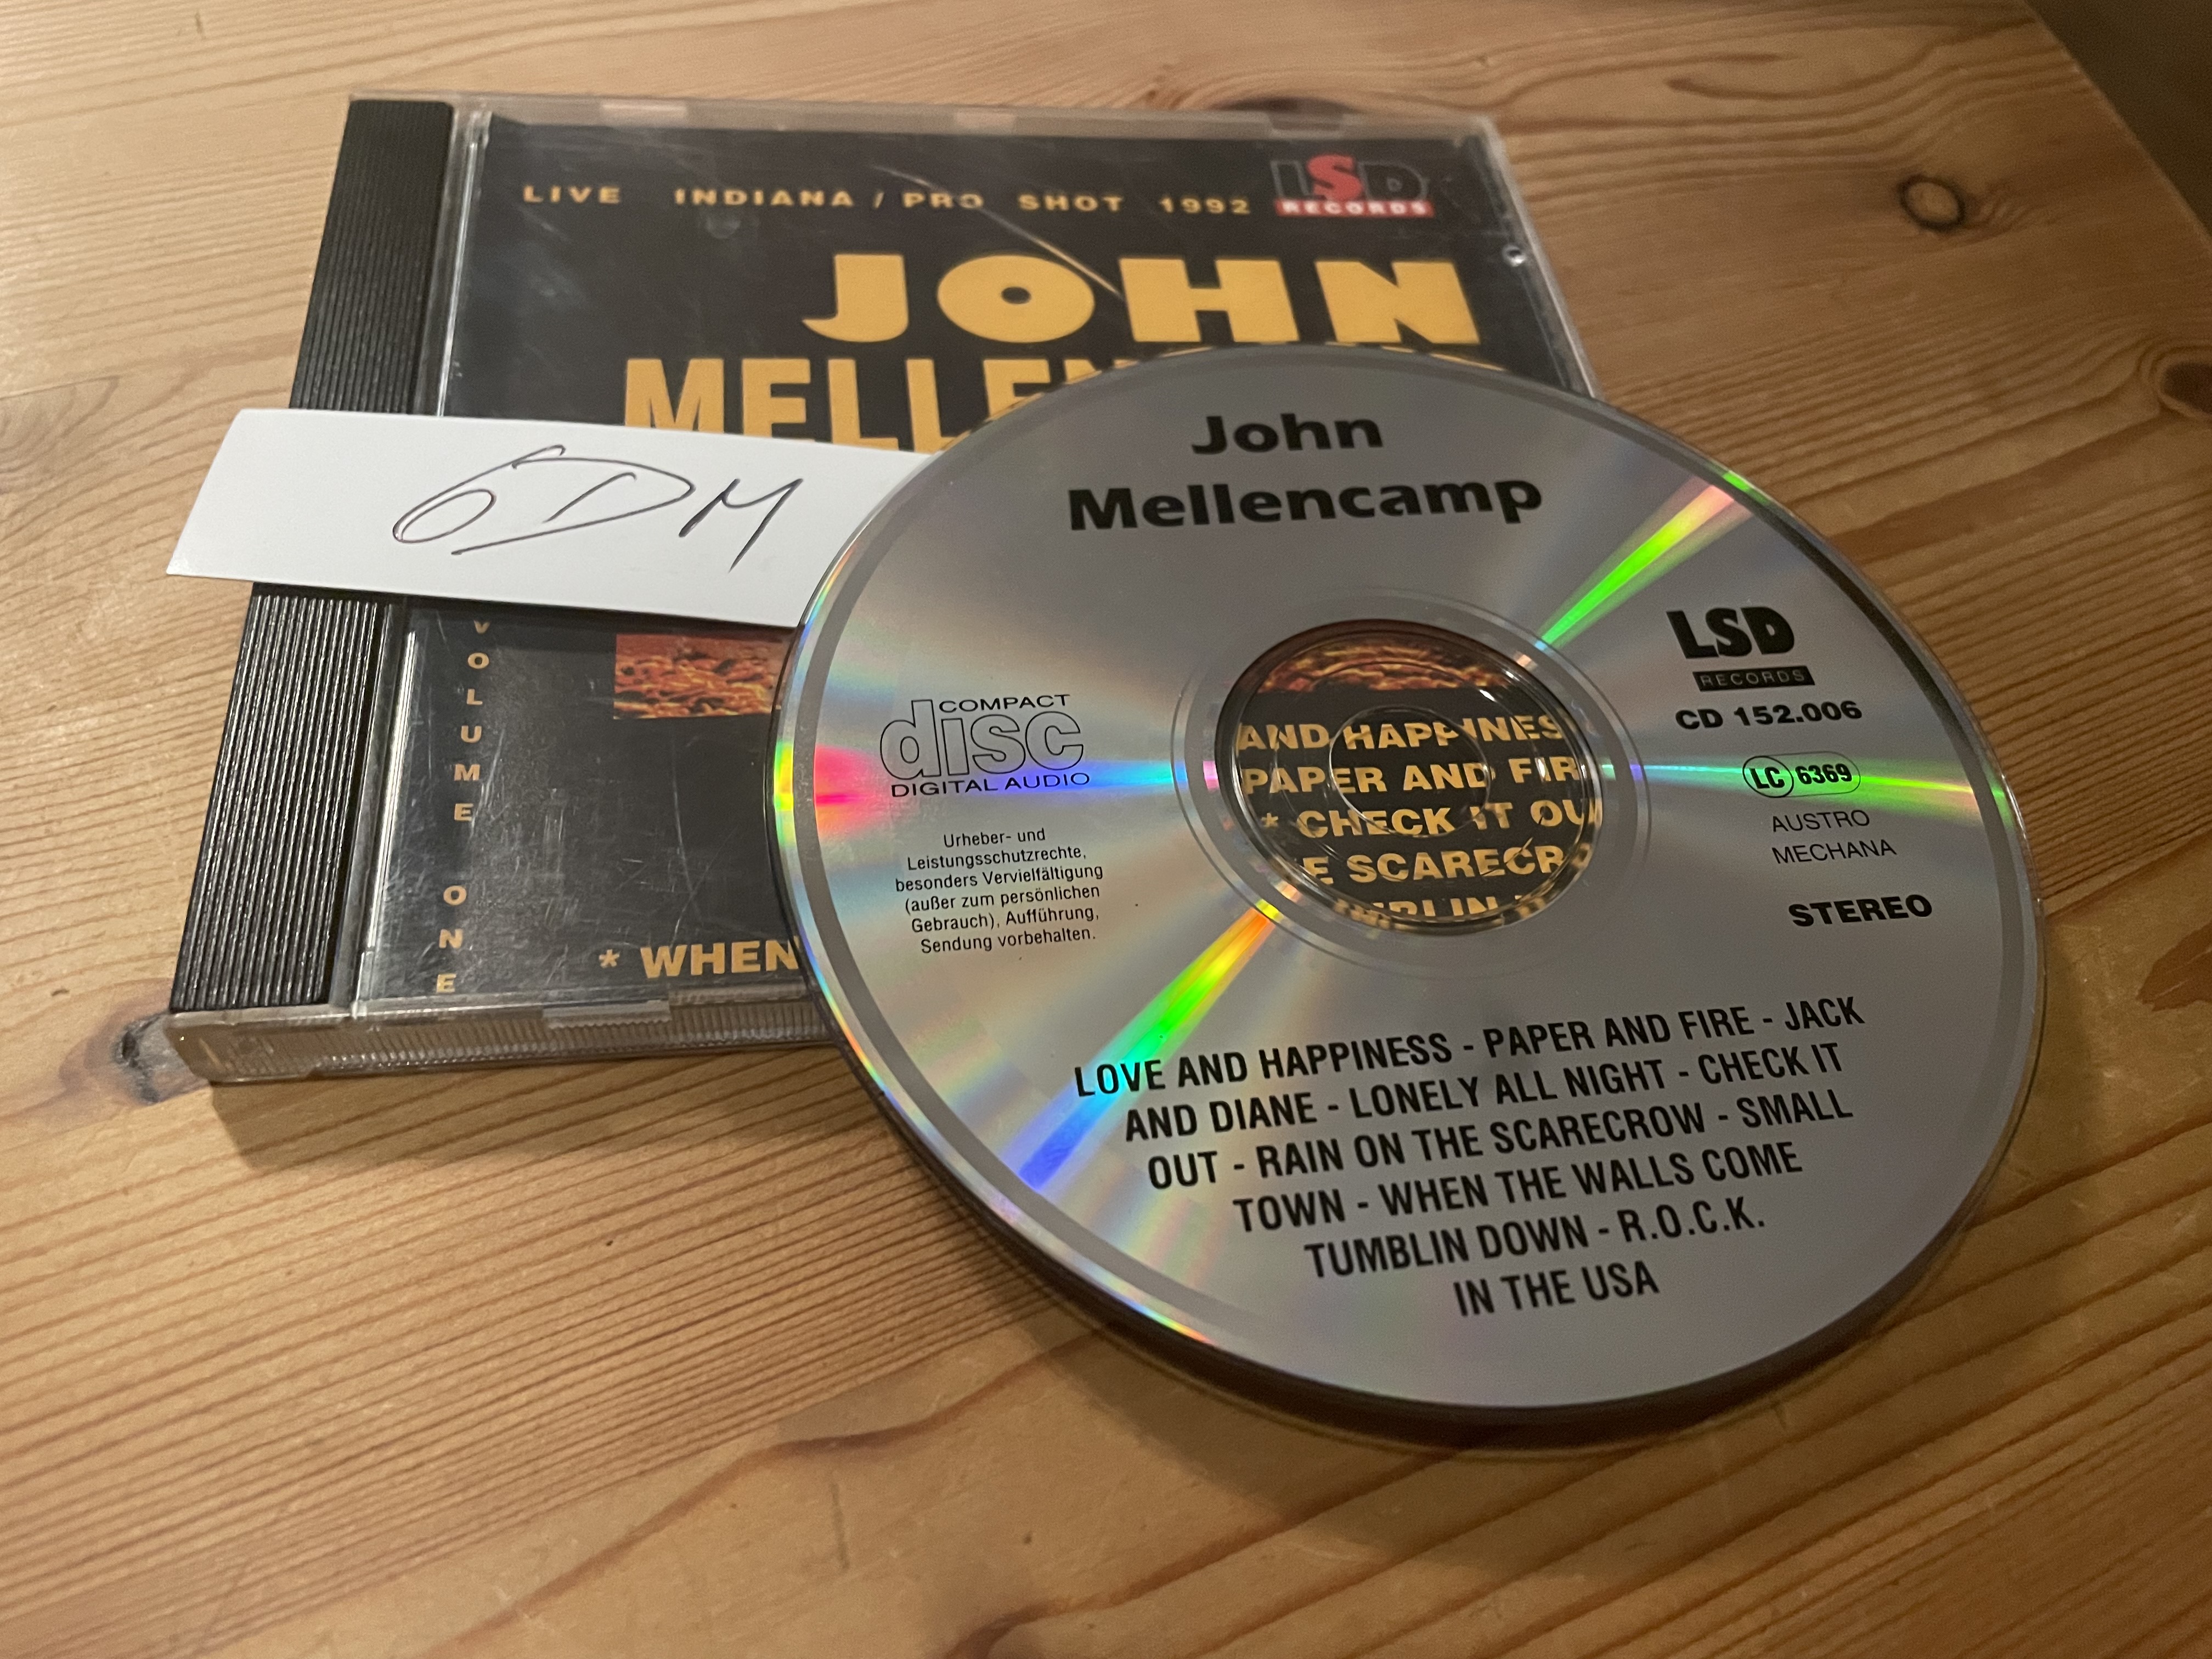 John Mellencamp-Live Indiana Pro Shot 1992 Volume One-(LSDCD152006)-Bootleg-CD-FLAC-1992-6DM